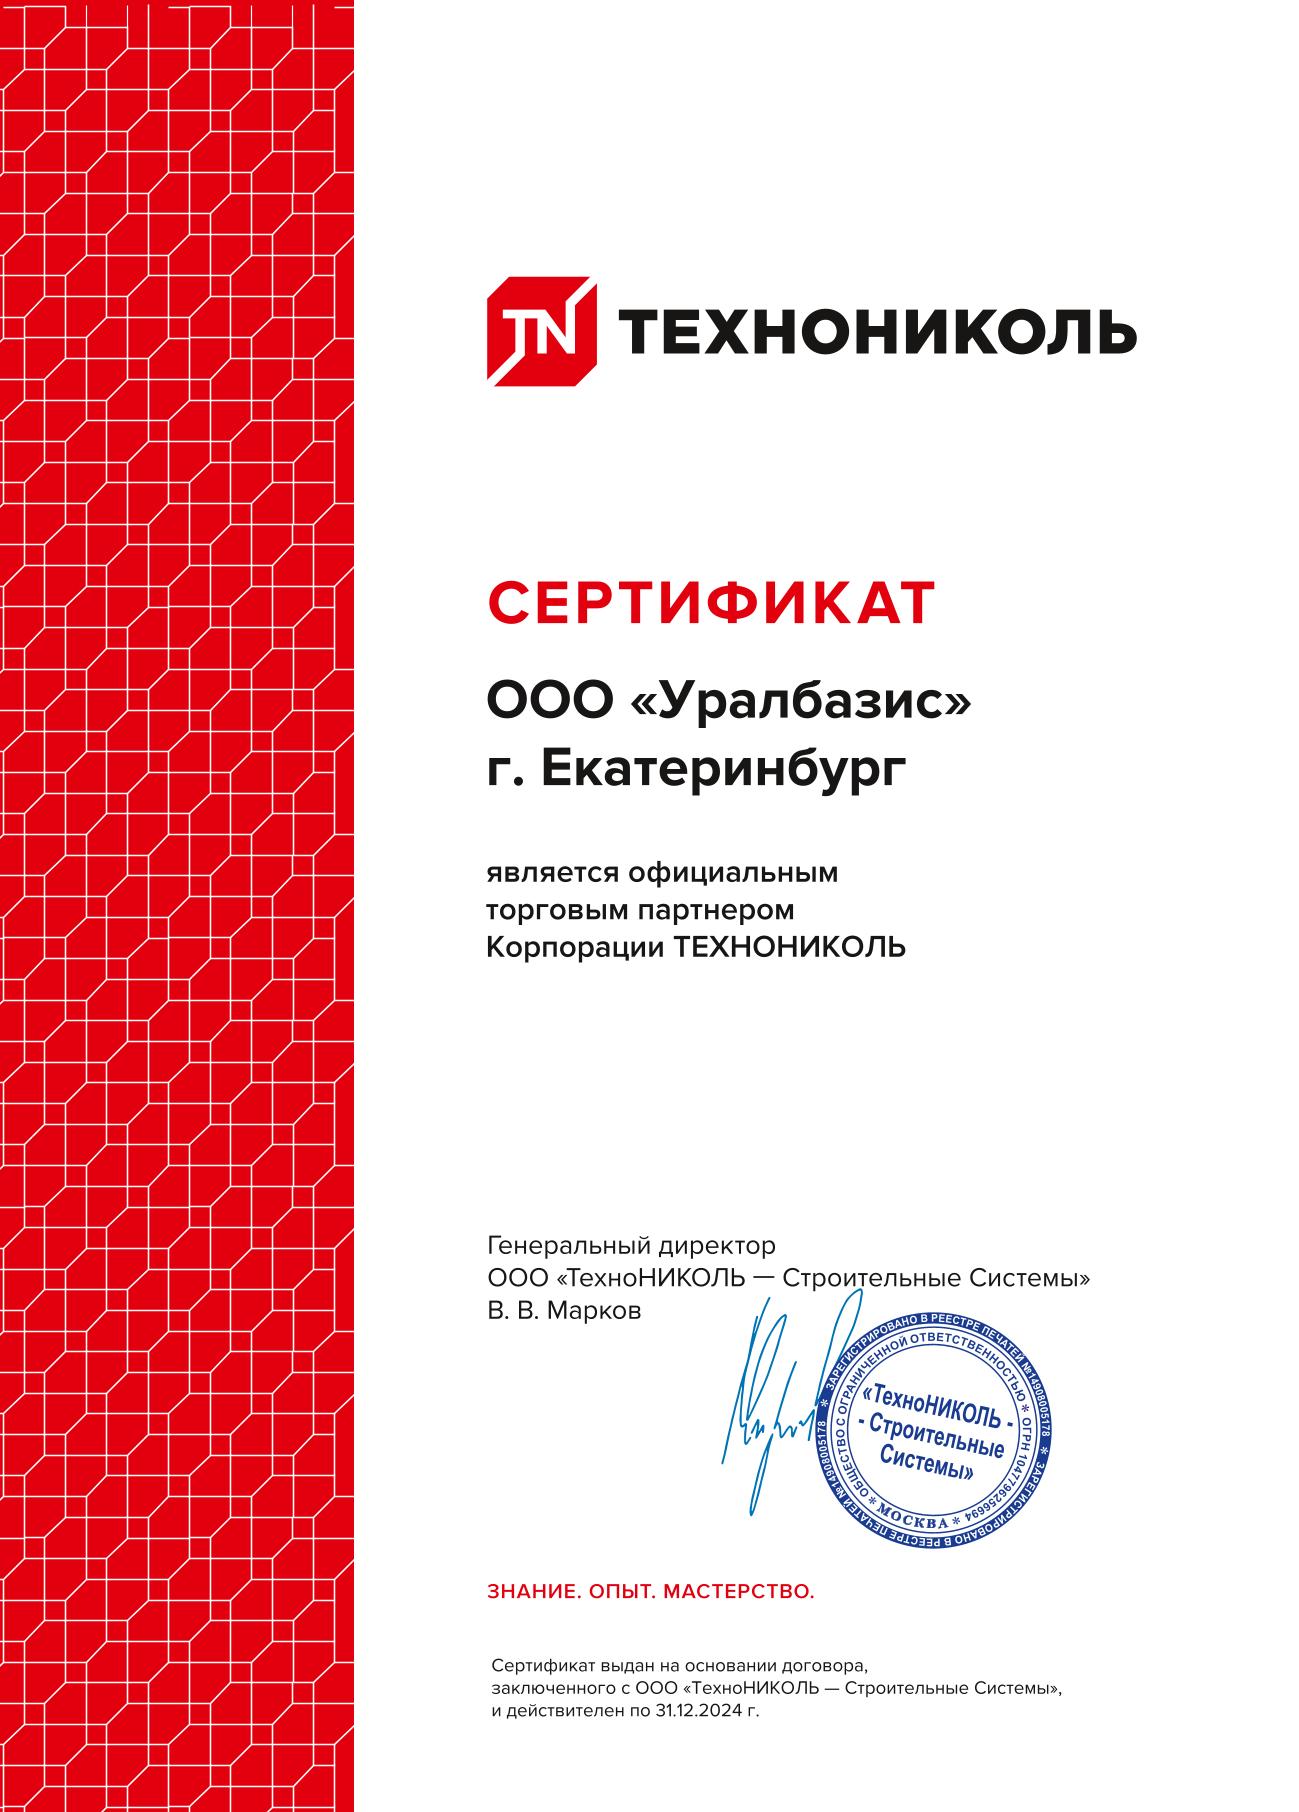 Сертификат дистрибьютора Технониколь 2024 УРАЛБАЗИС